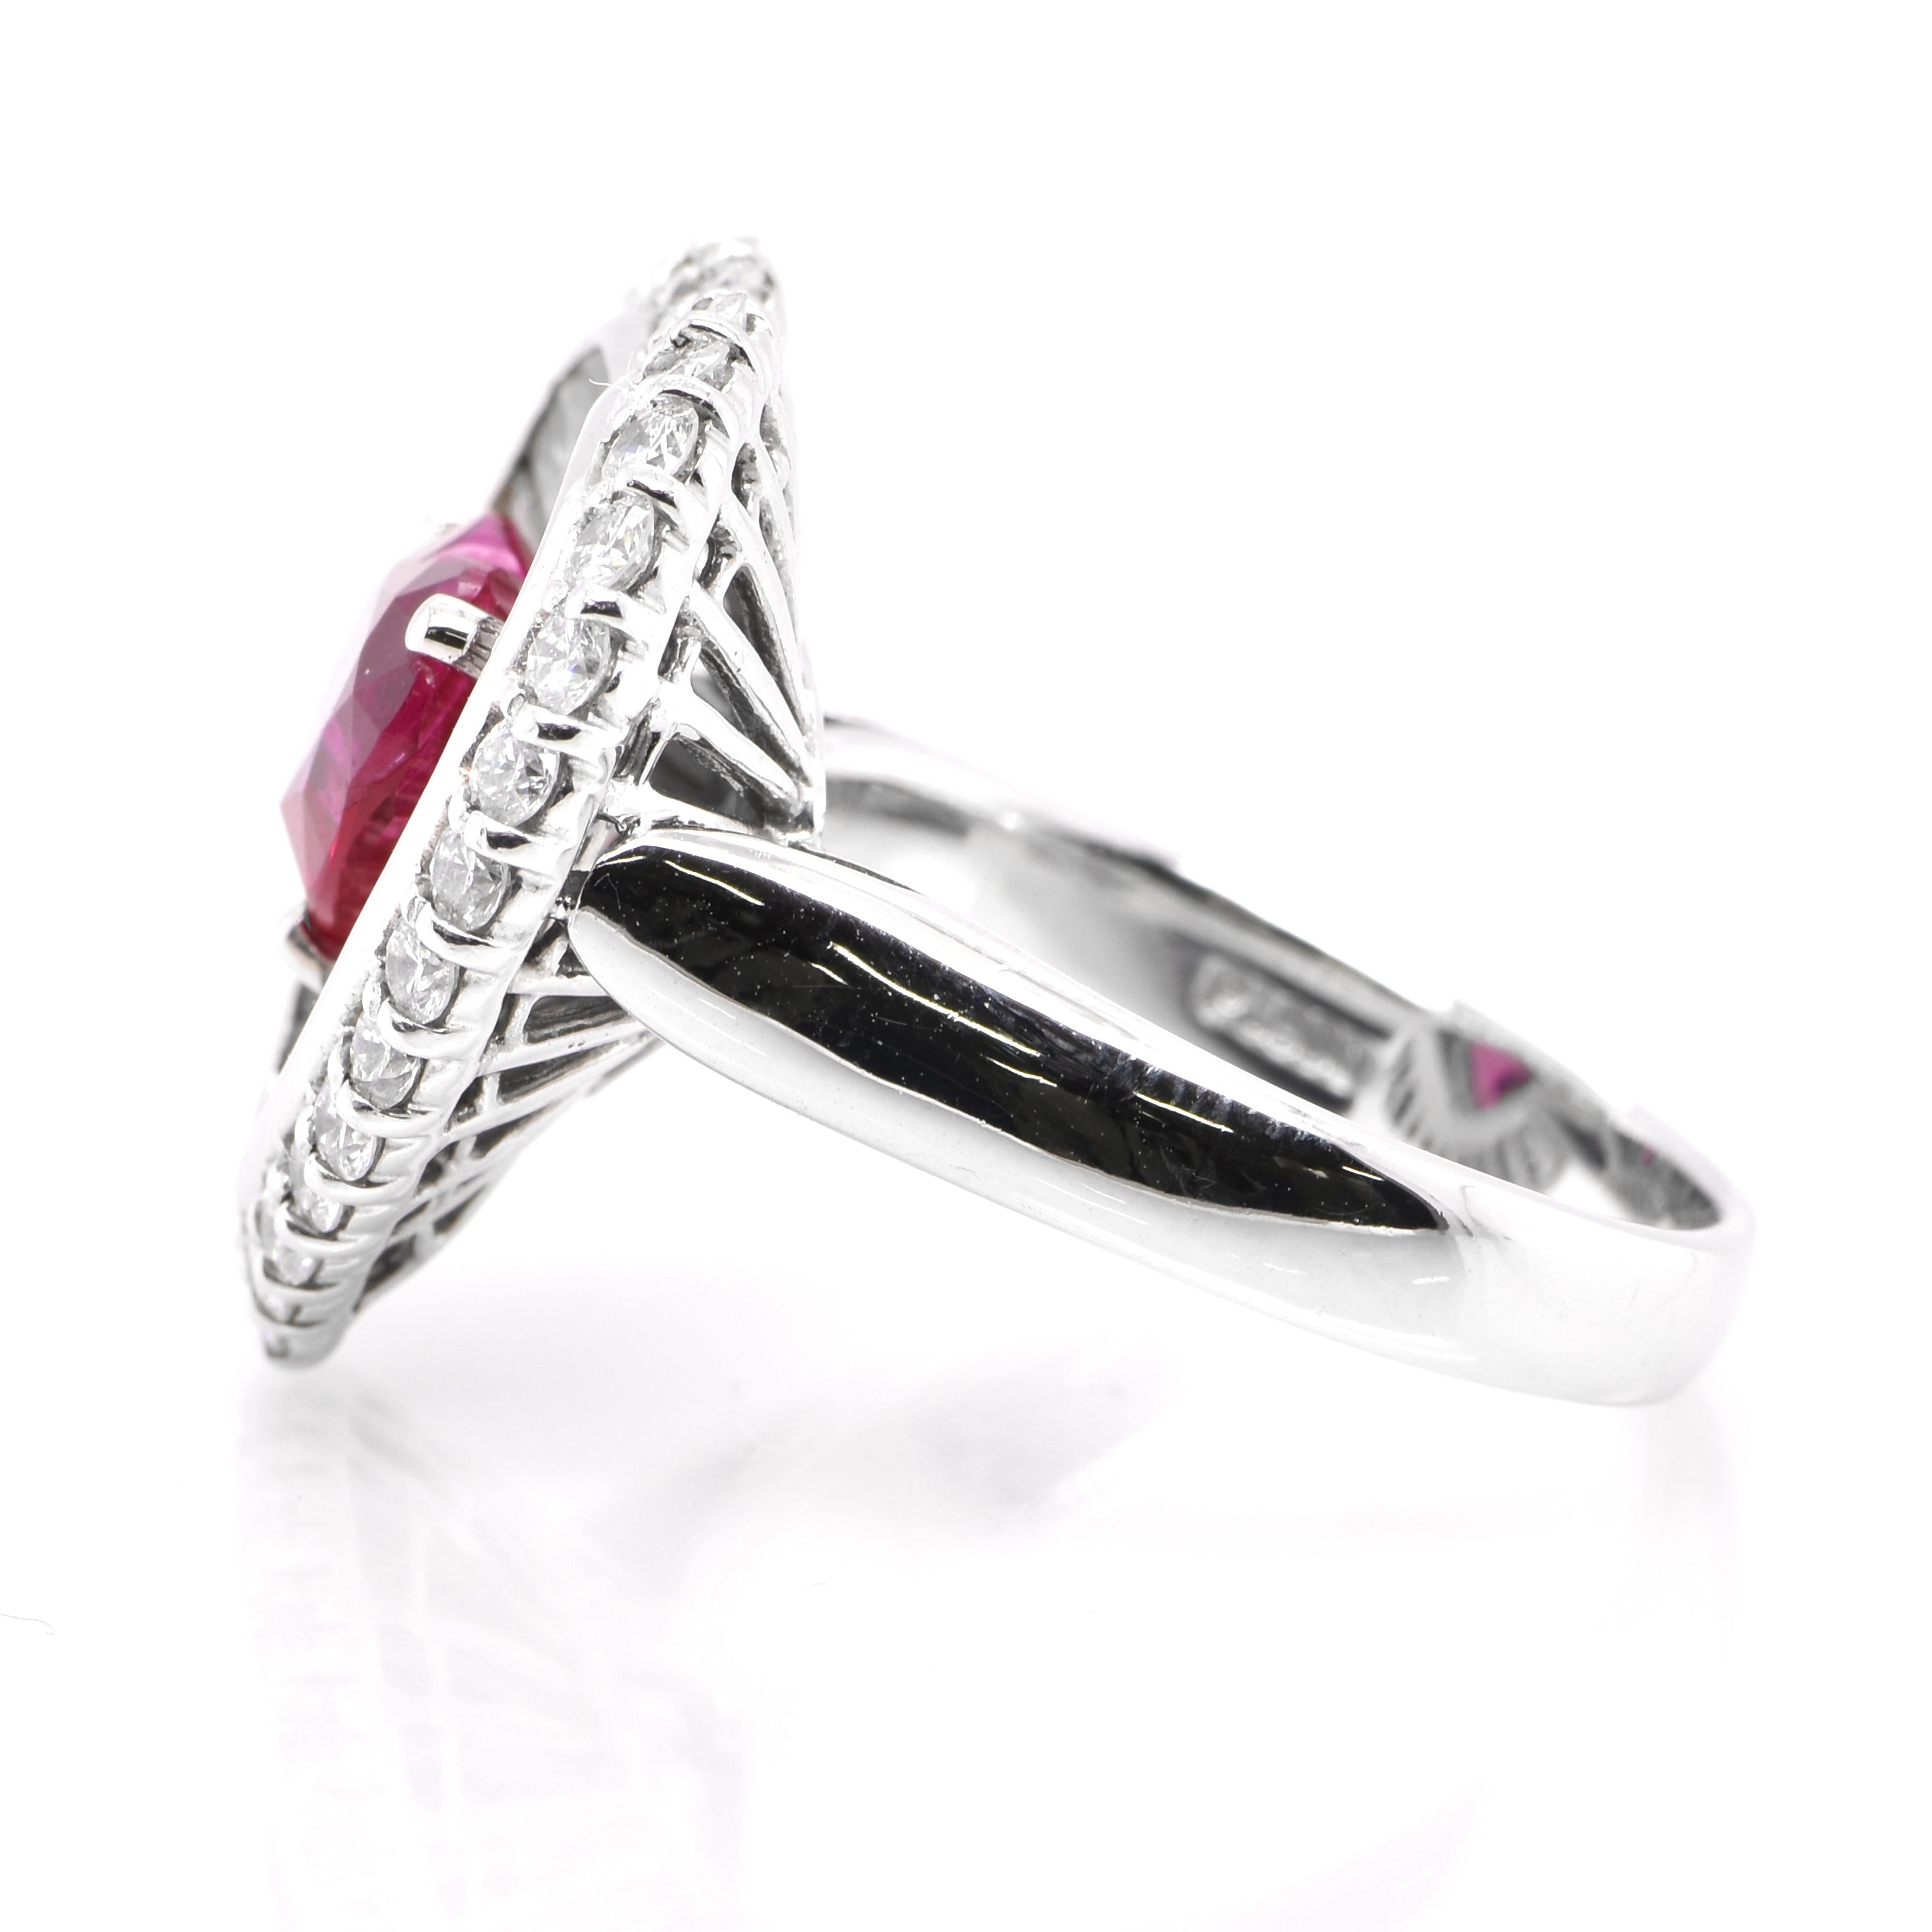 Heart Cut GIA Certified 3.02 Carat Natural Burmese Ruby and Diamond Ring Set in Platinum